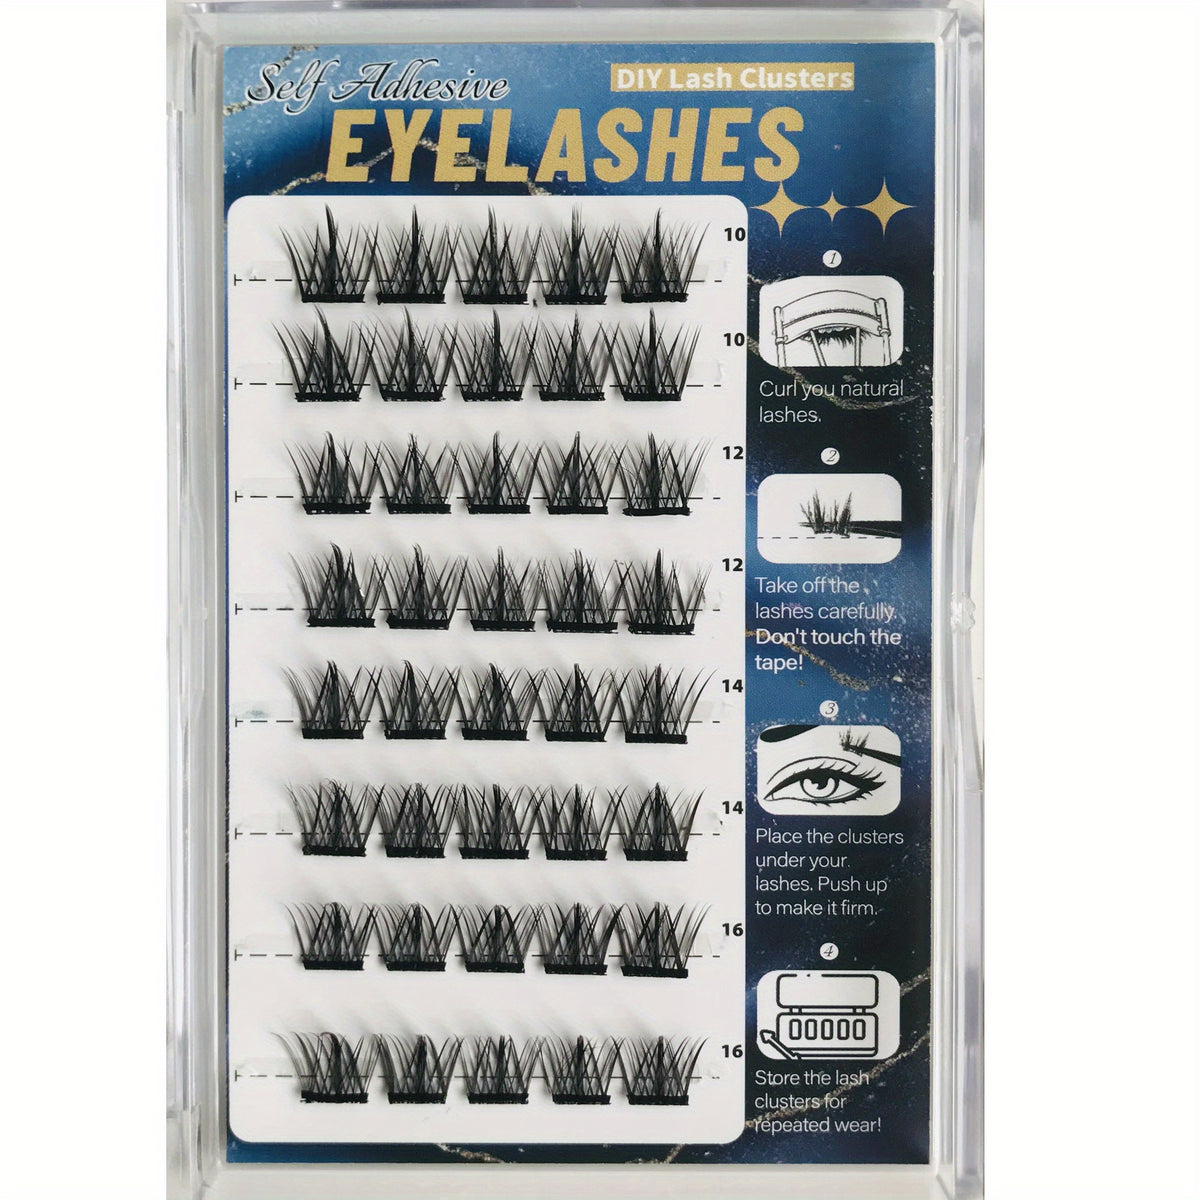 No Glue Need - Zilool Self Adhesive False Eyelashes Reusable Lash Clusters DIY 8-16mm Eyelashes Extension